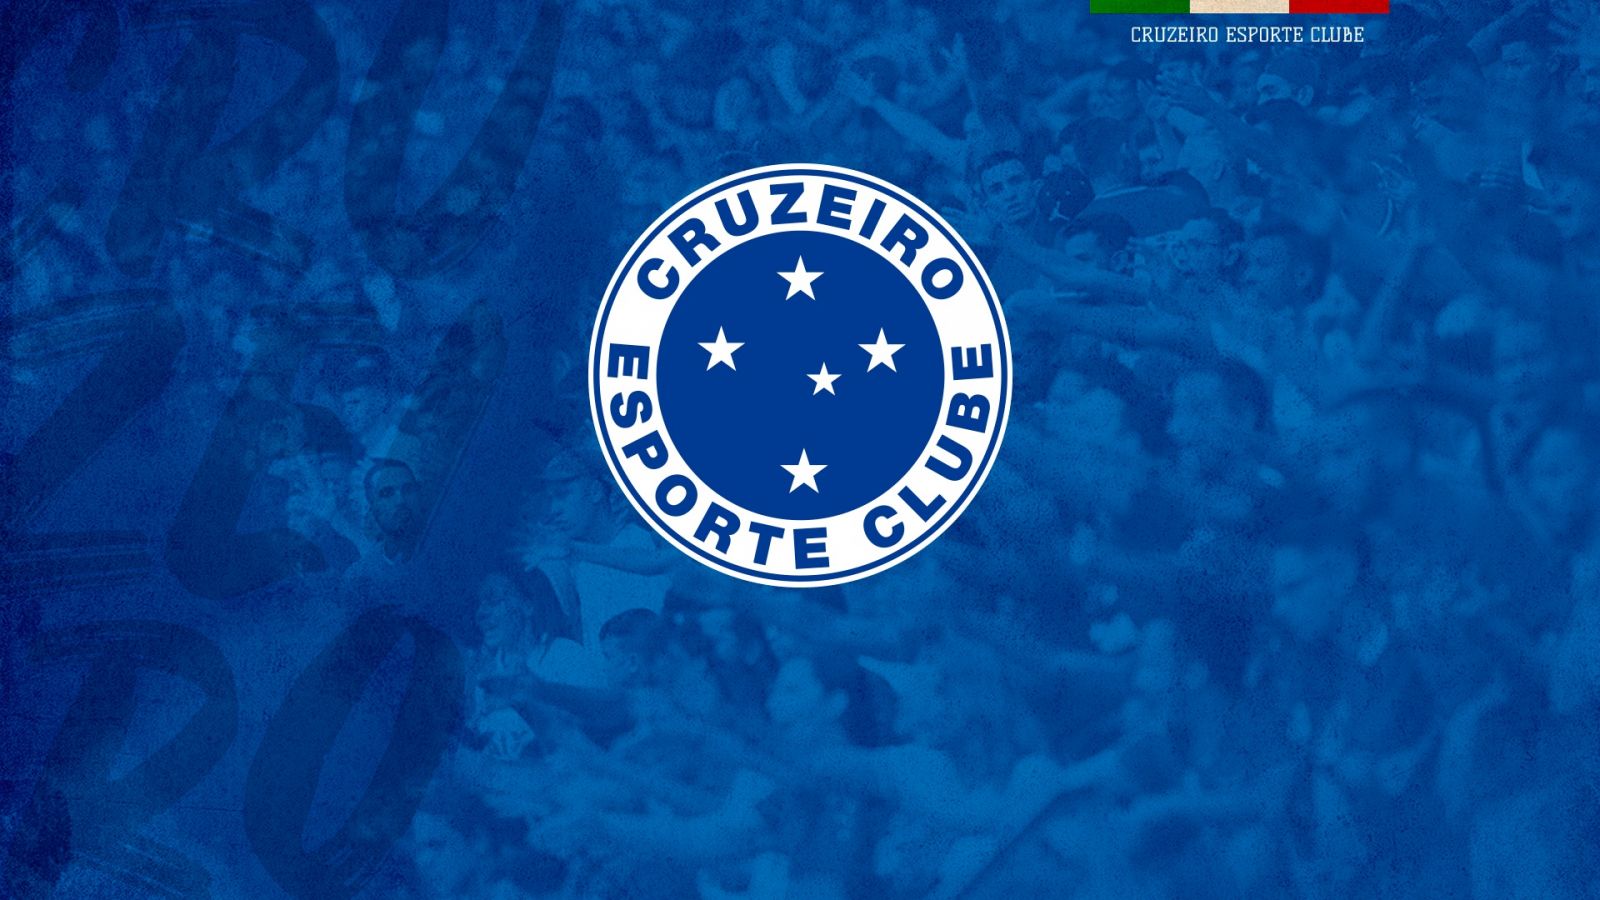 Cruzeiro Esporte Clube - Wikipedia